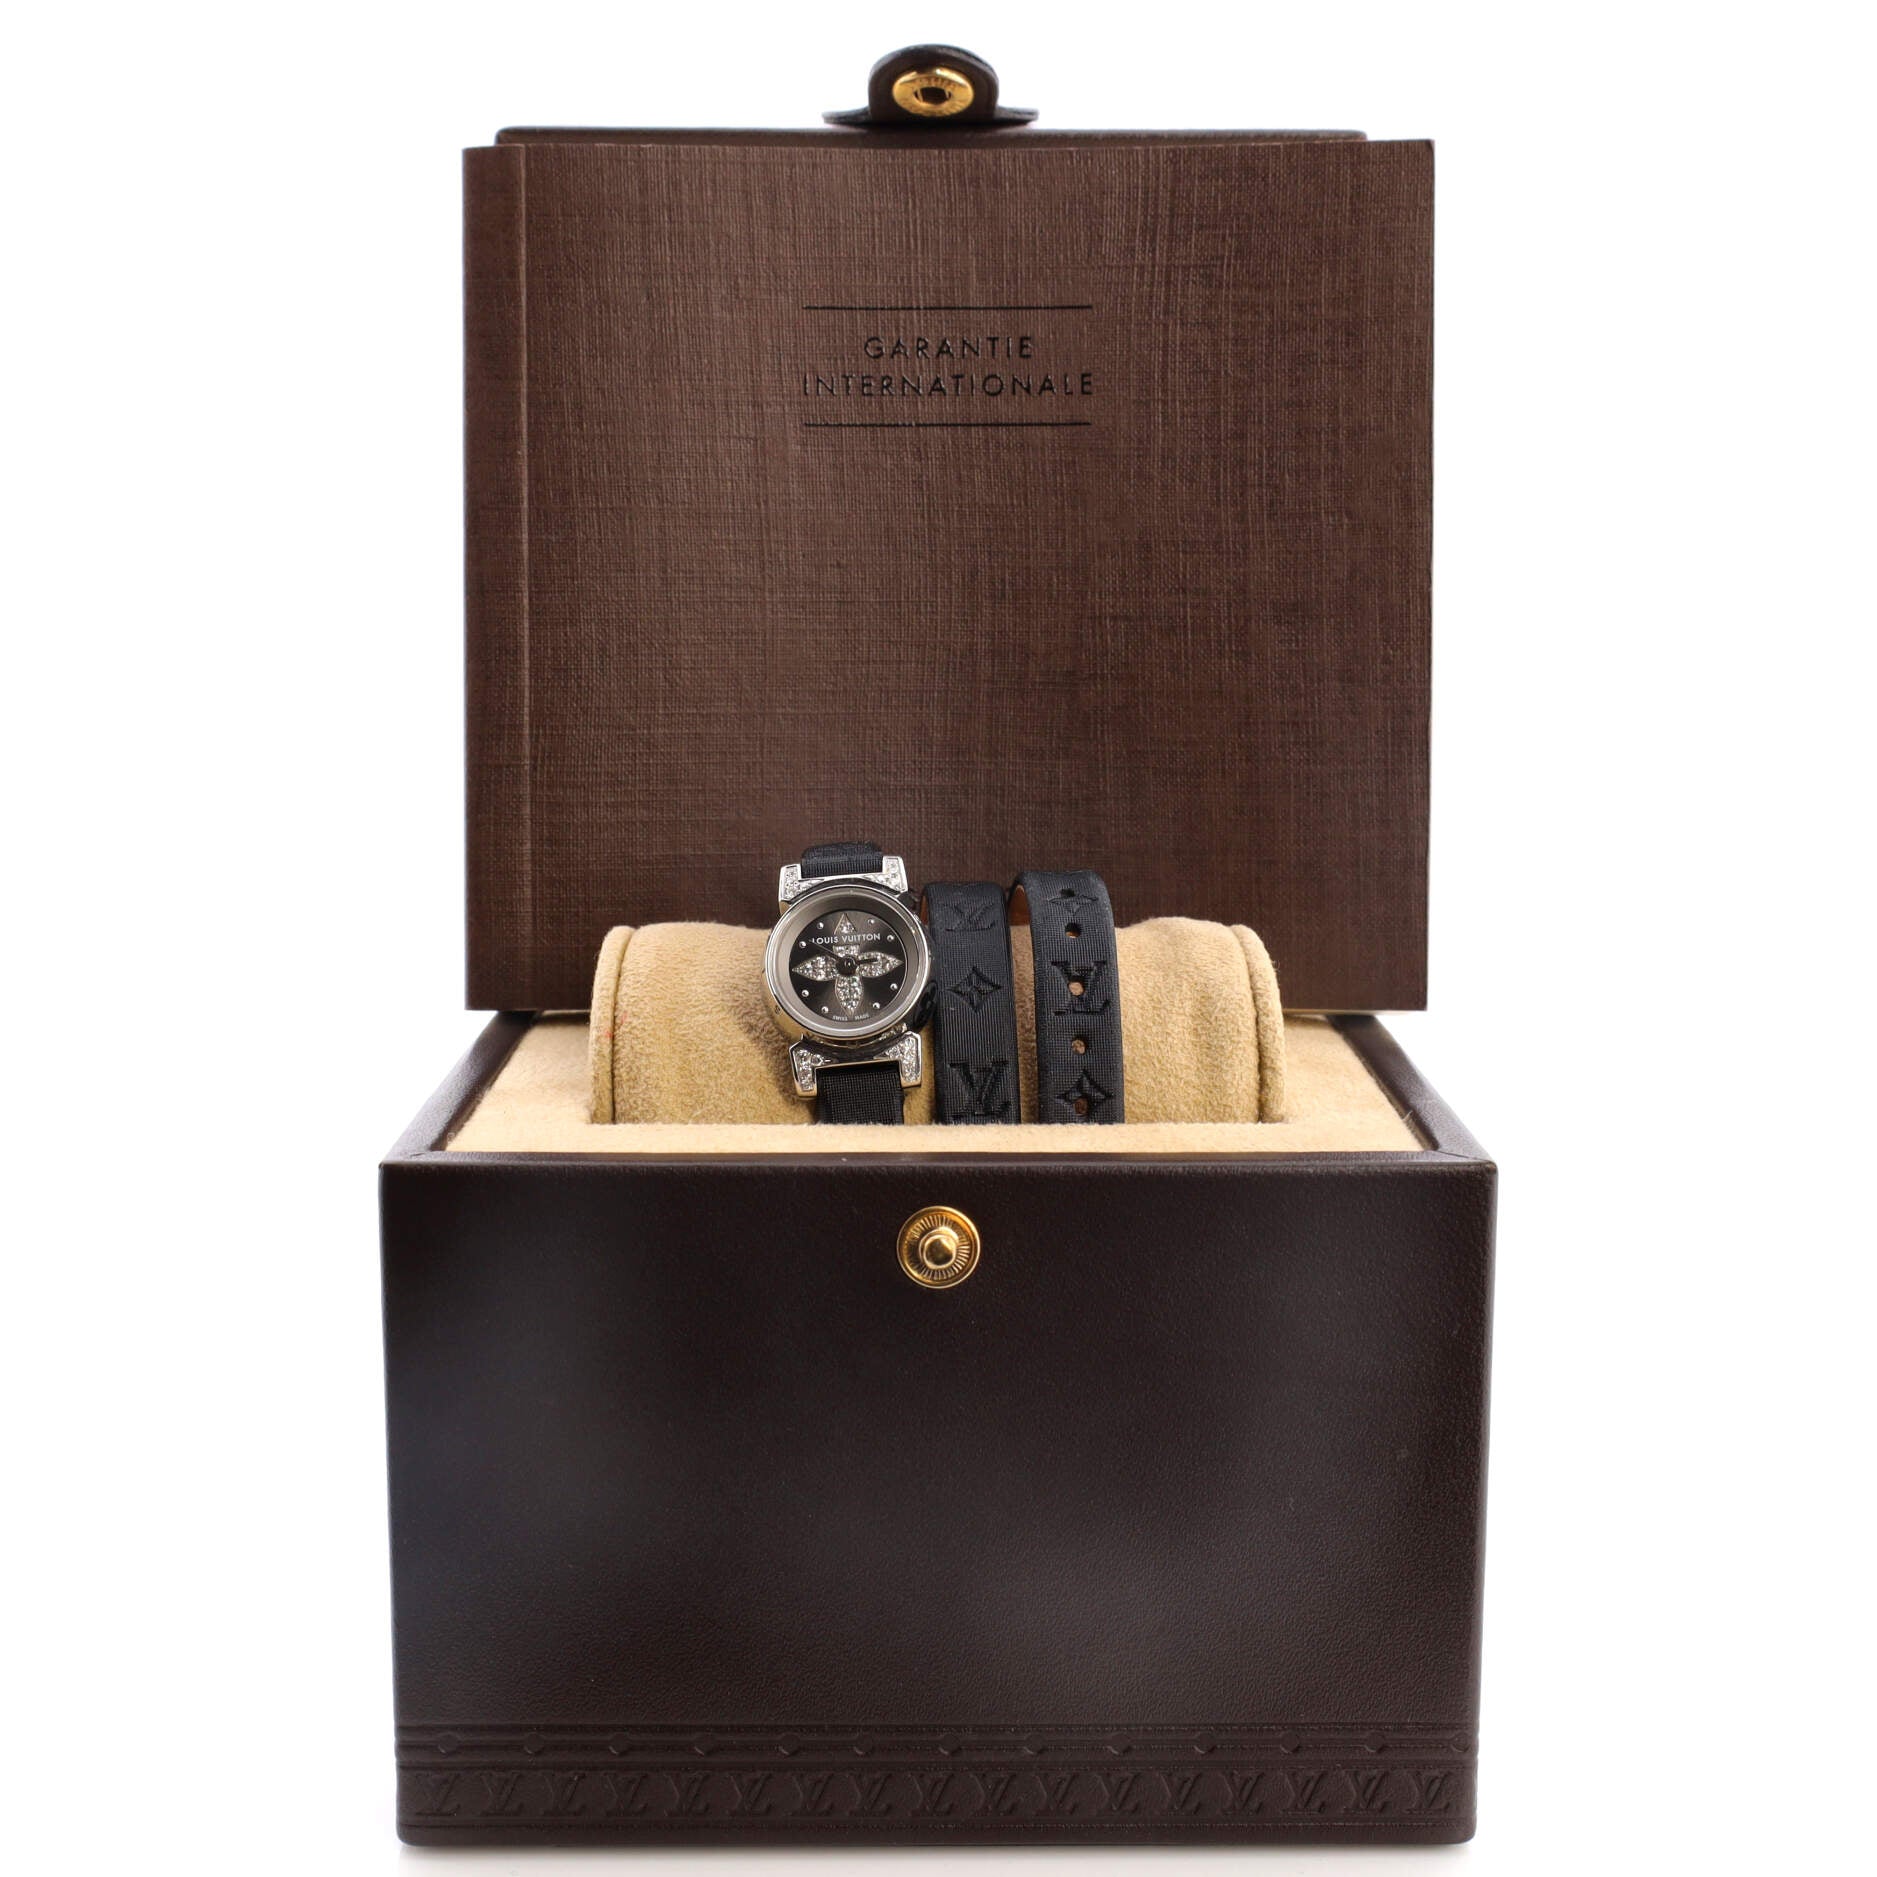 Louis Vuitton Tambour Bijou Noir Quartz Watch Stainless Steel And